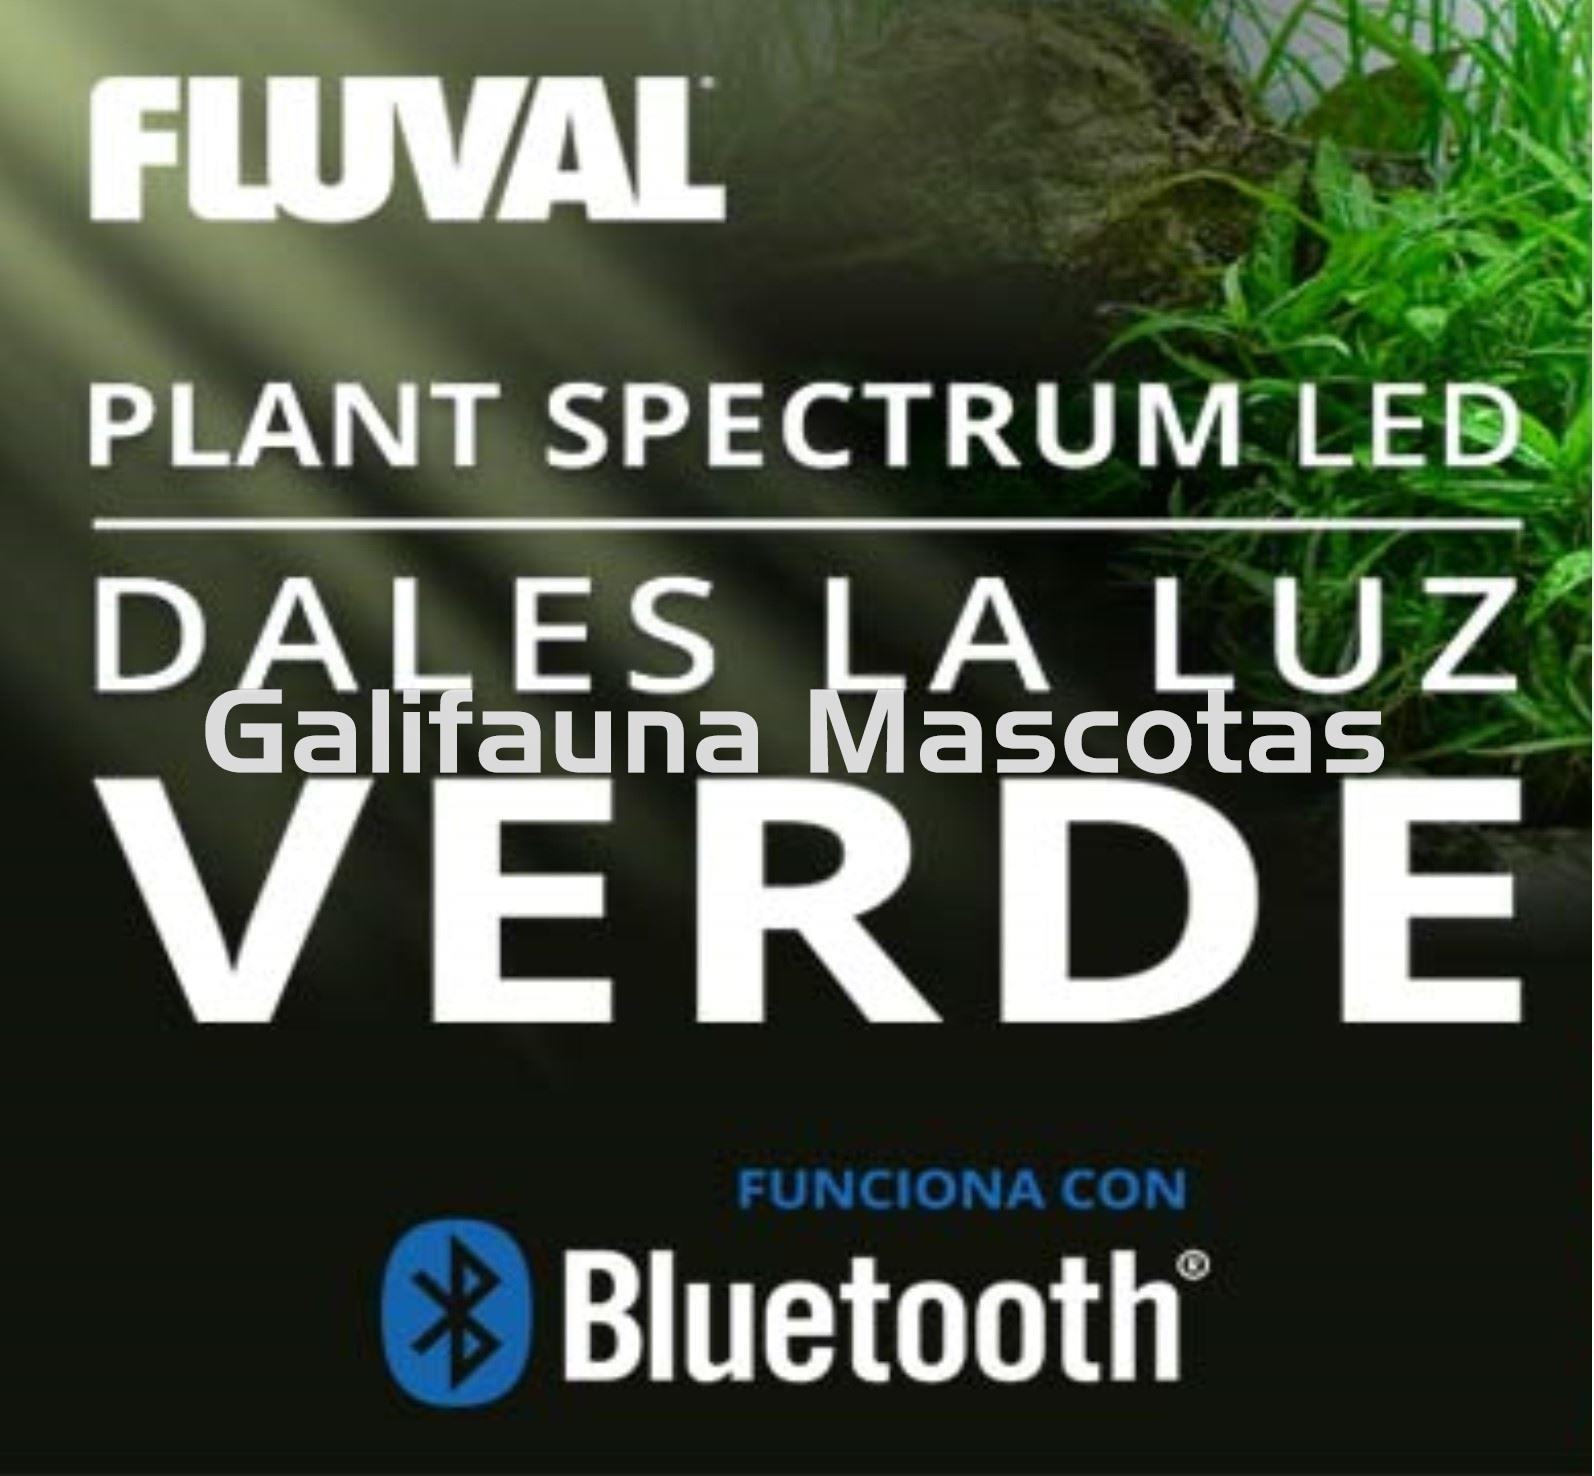 PANTALLA LED BLUETOOTH FLUVAL PLANT SPECTRUM 3. Especial plantación. APP Fluval. Brazos extensibles. - Imagen 2